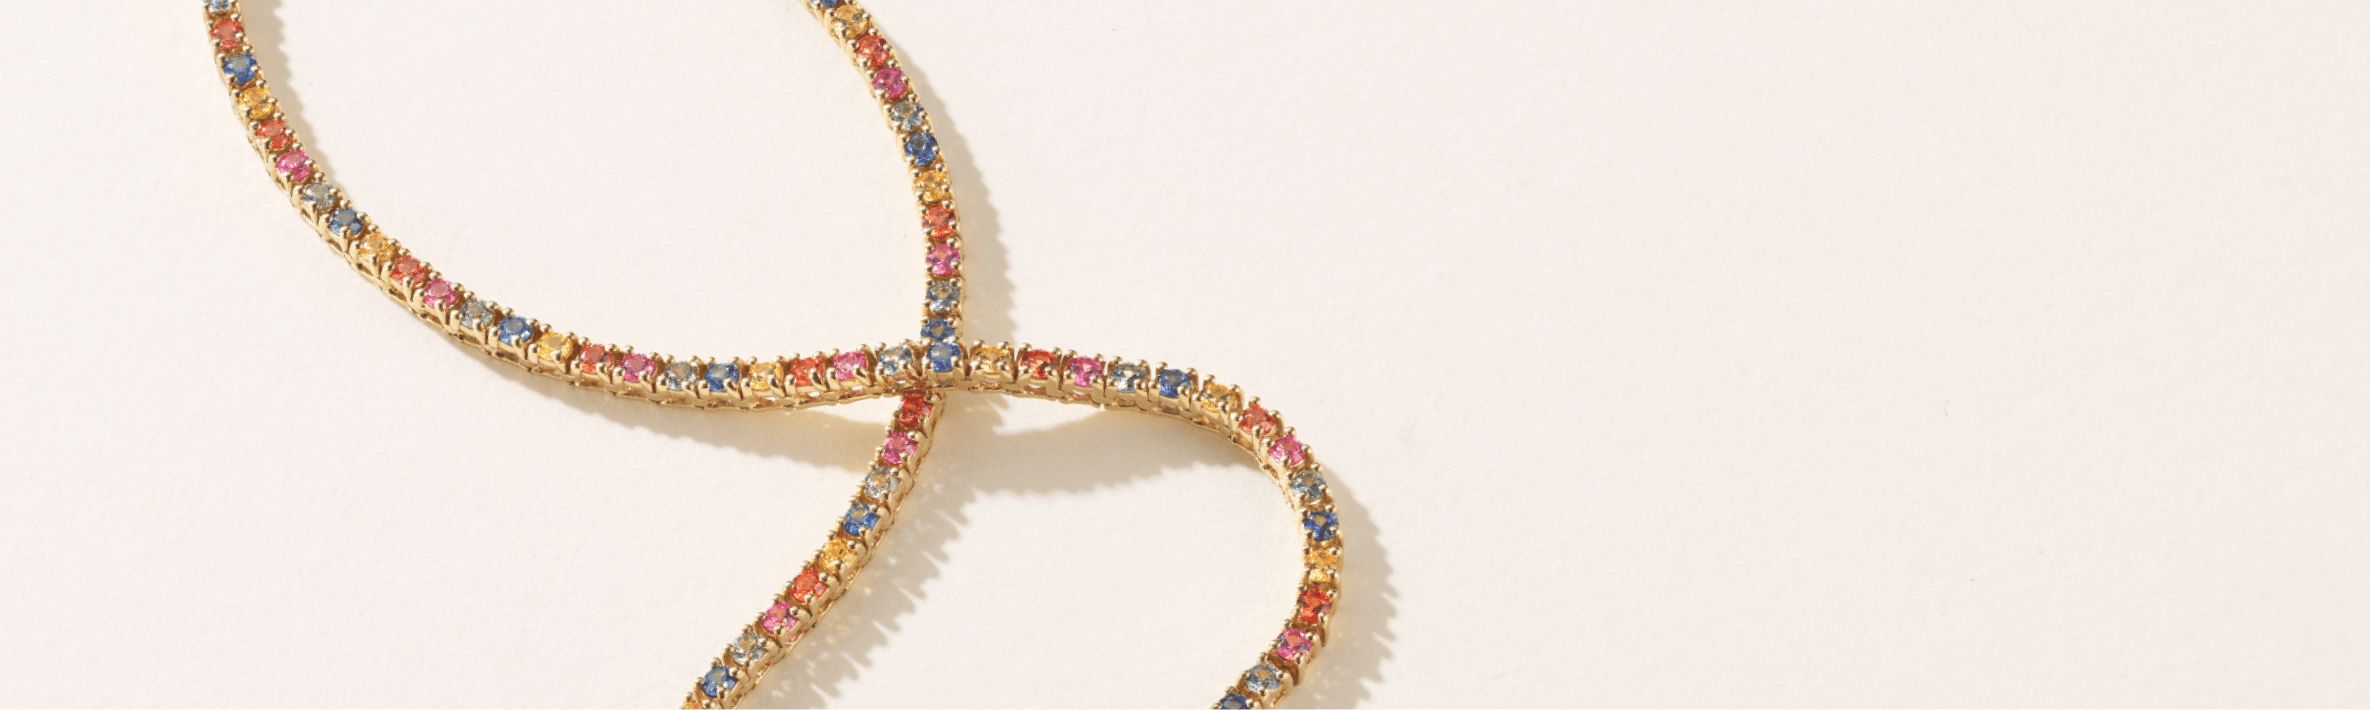 A rainbow gemstone necklace